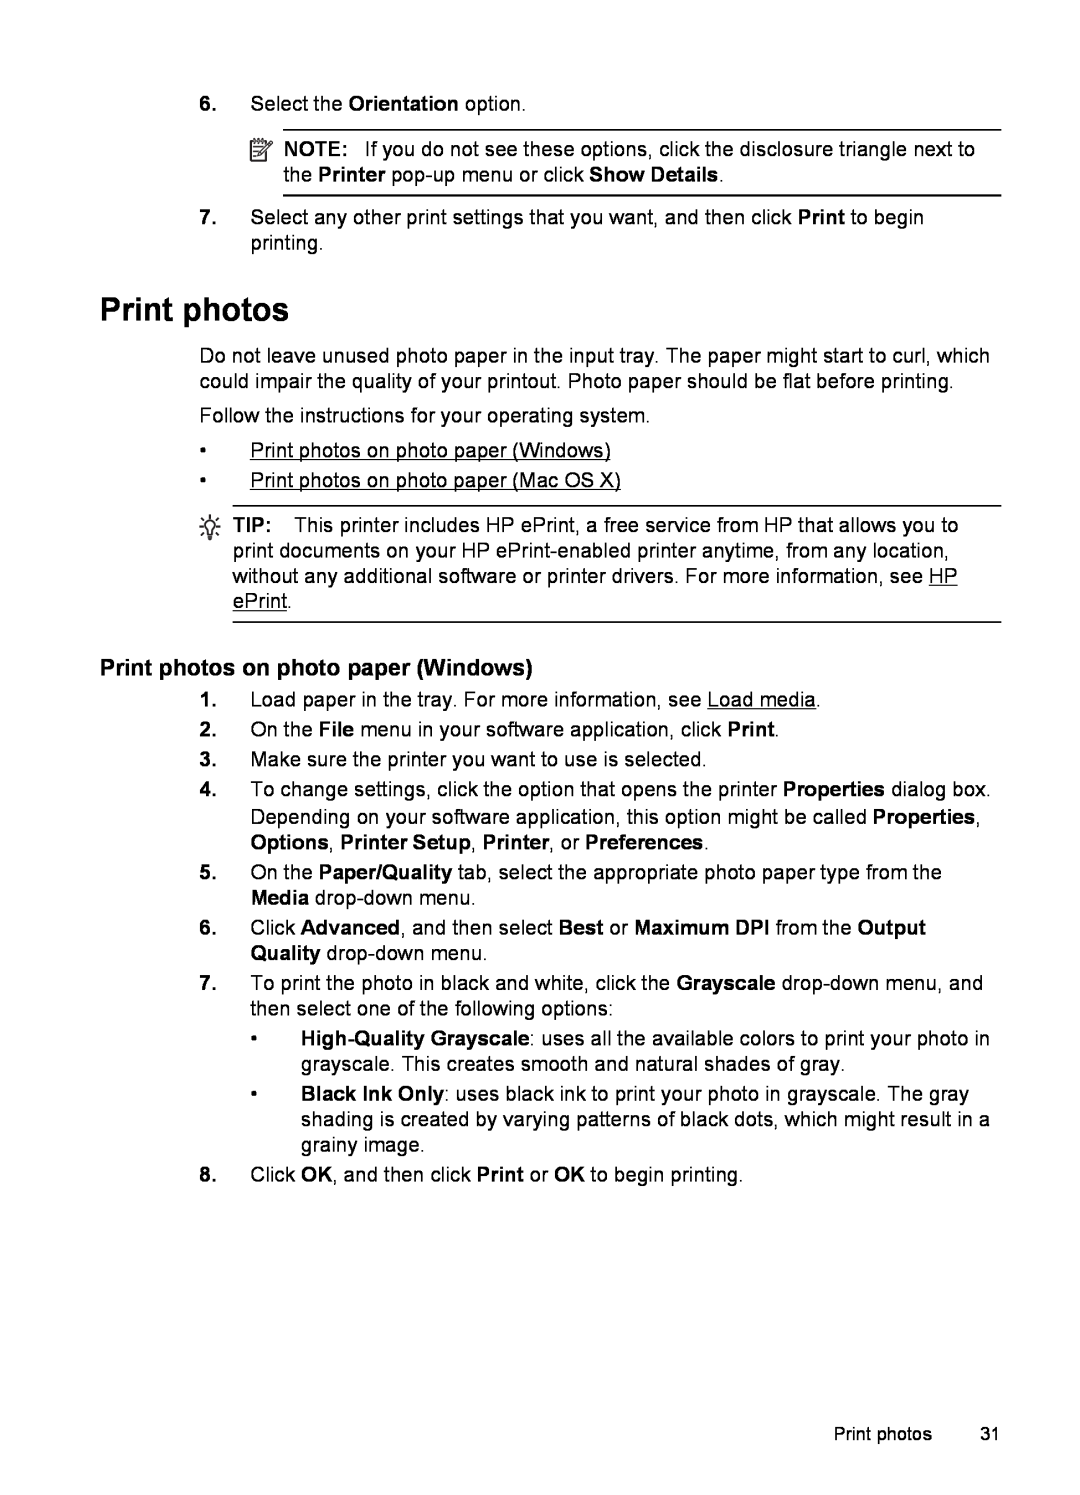 HP 6600 - H7 manual Print photos on photo paper Windows 